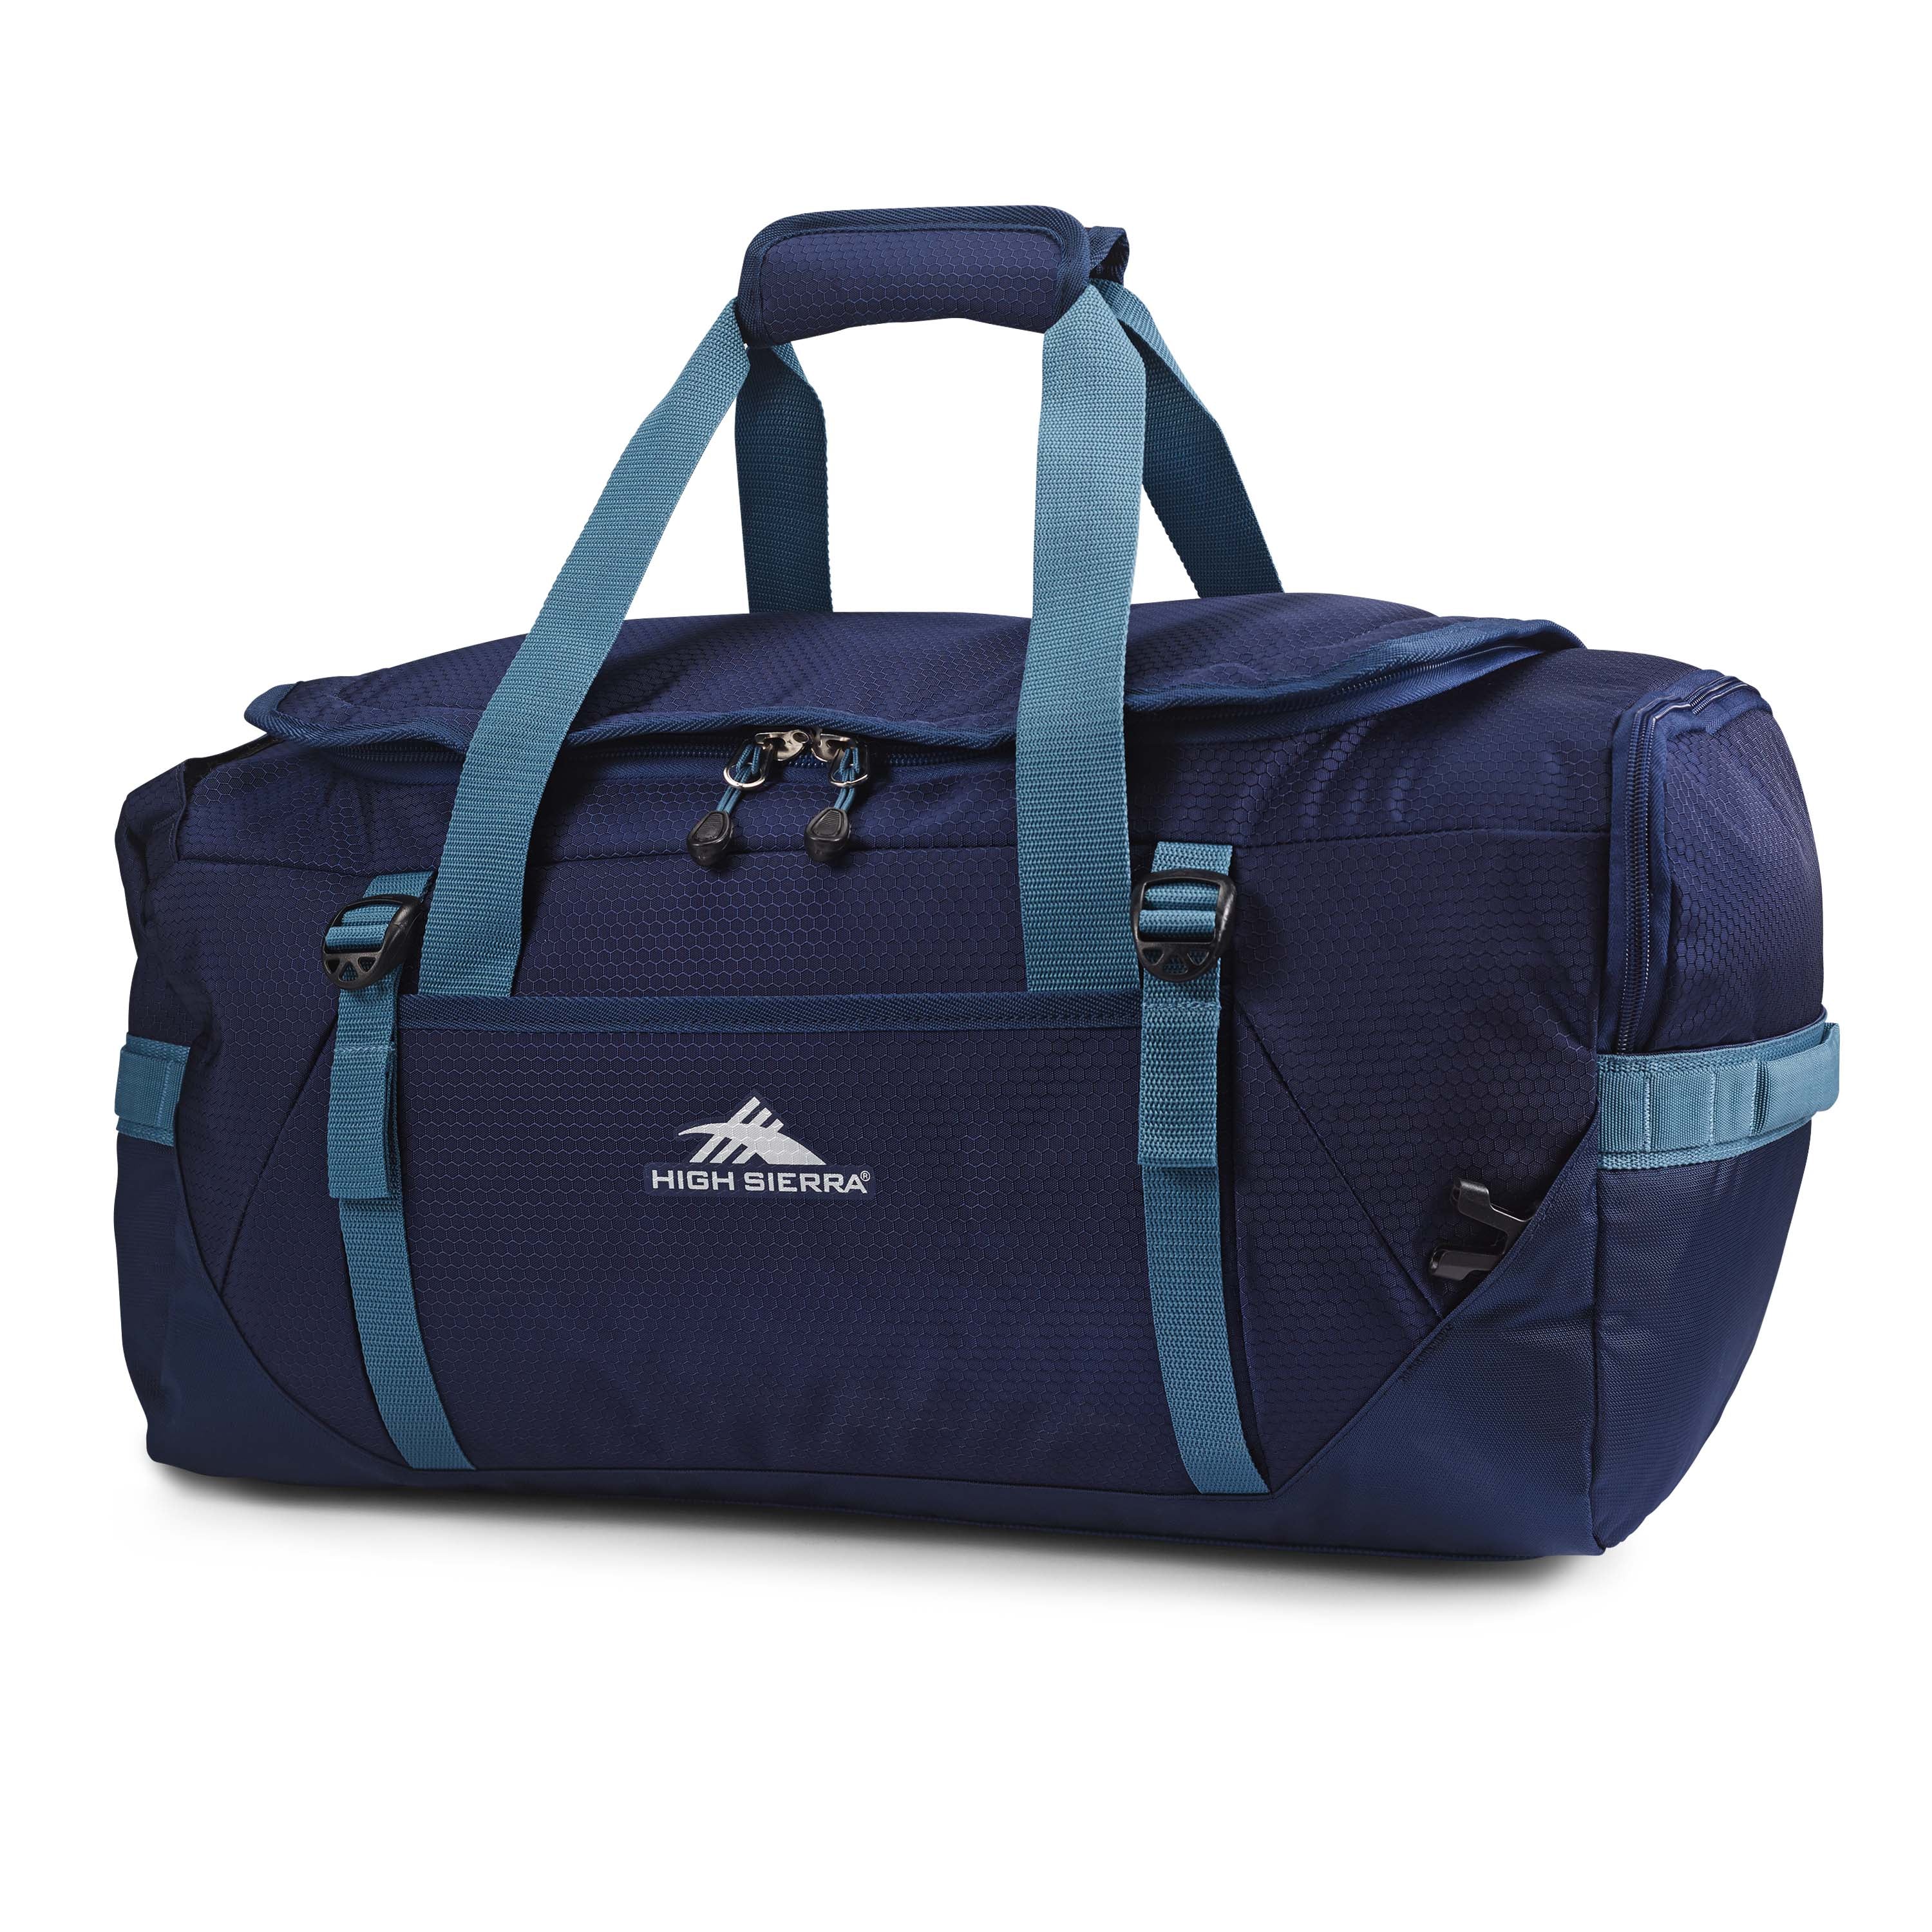 High Sierra - Convertable Backpack-Duffle - Navy-Graphite Blue-1